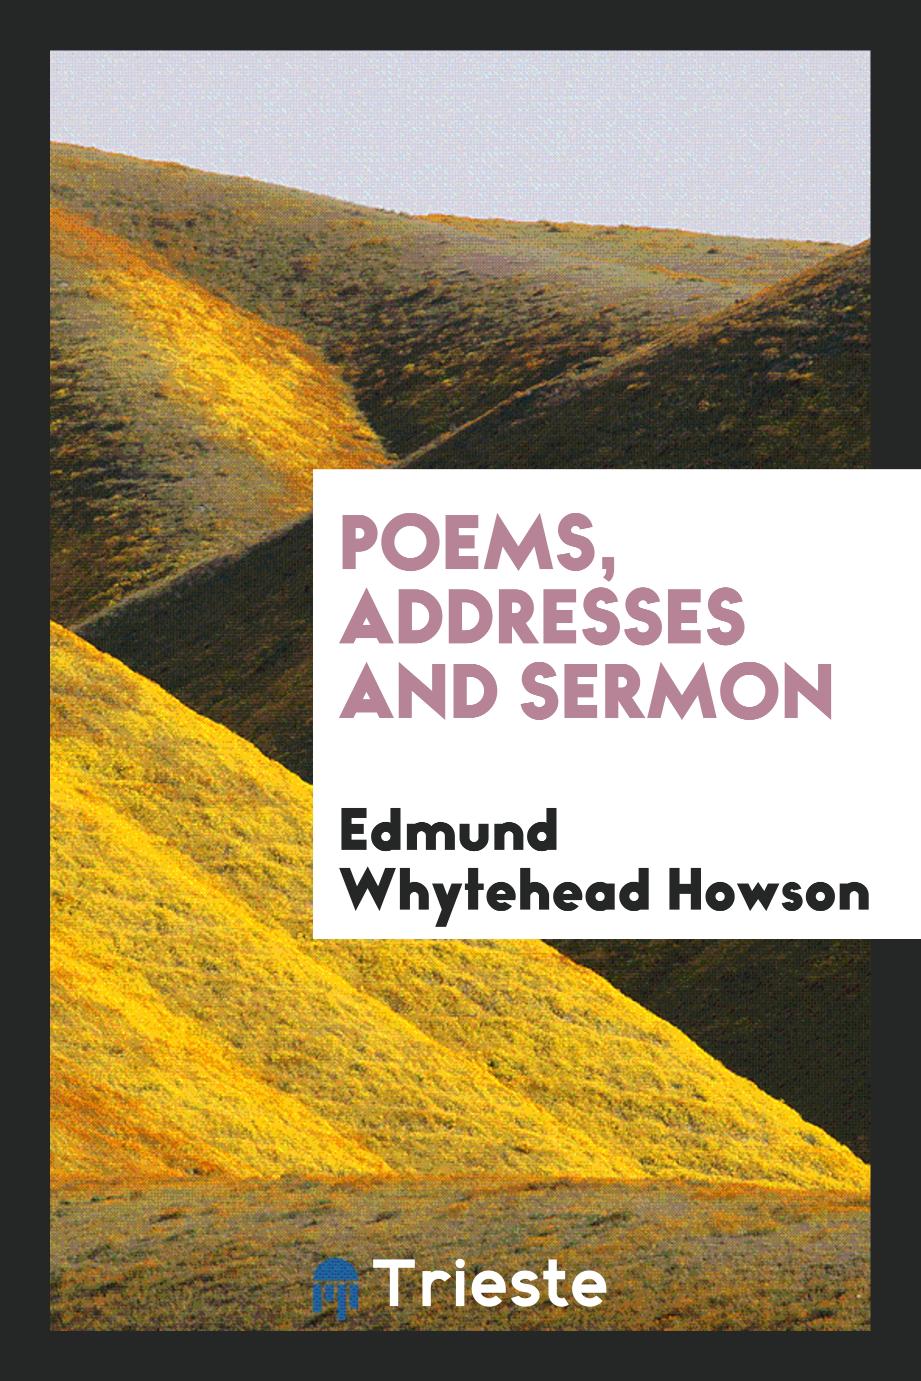 Poems, addresses and sermon